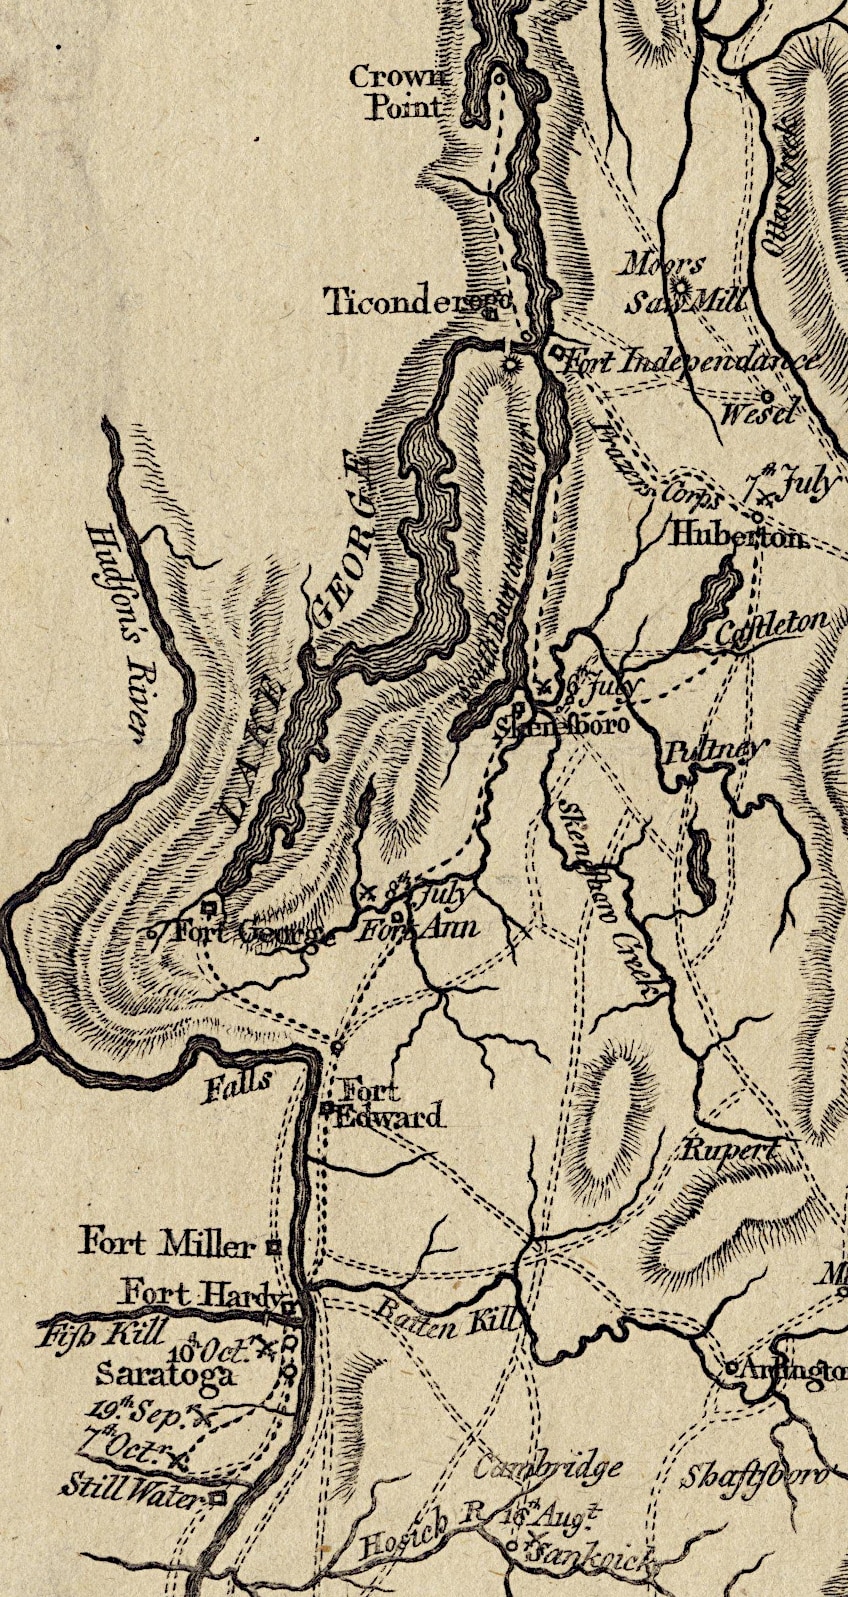 Location of the Battles of Saratoga